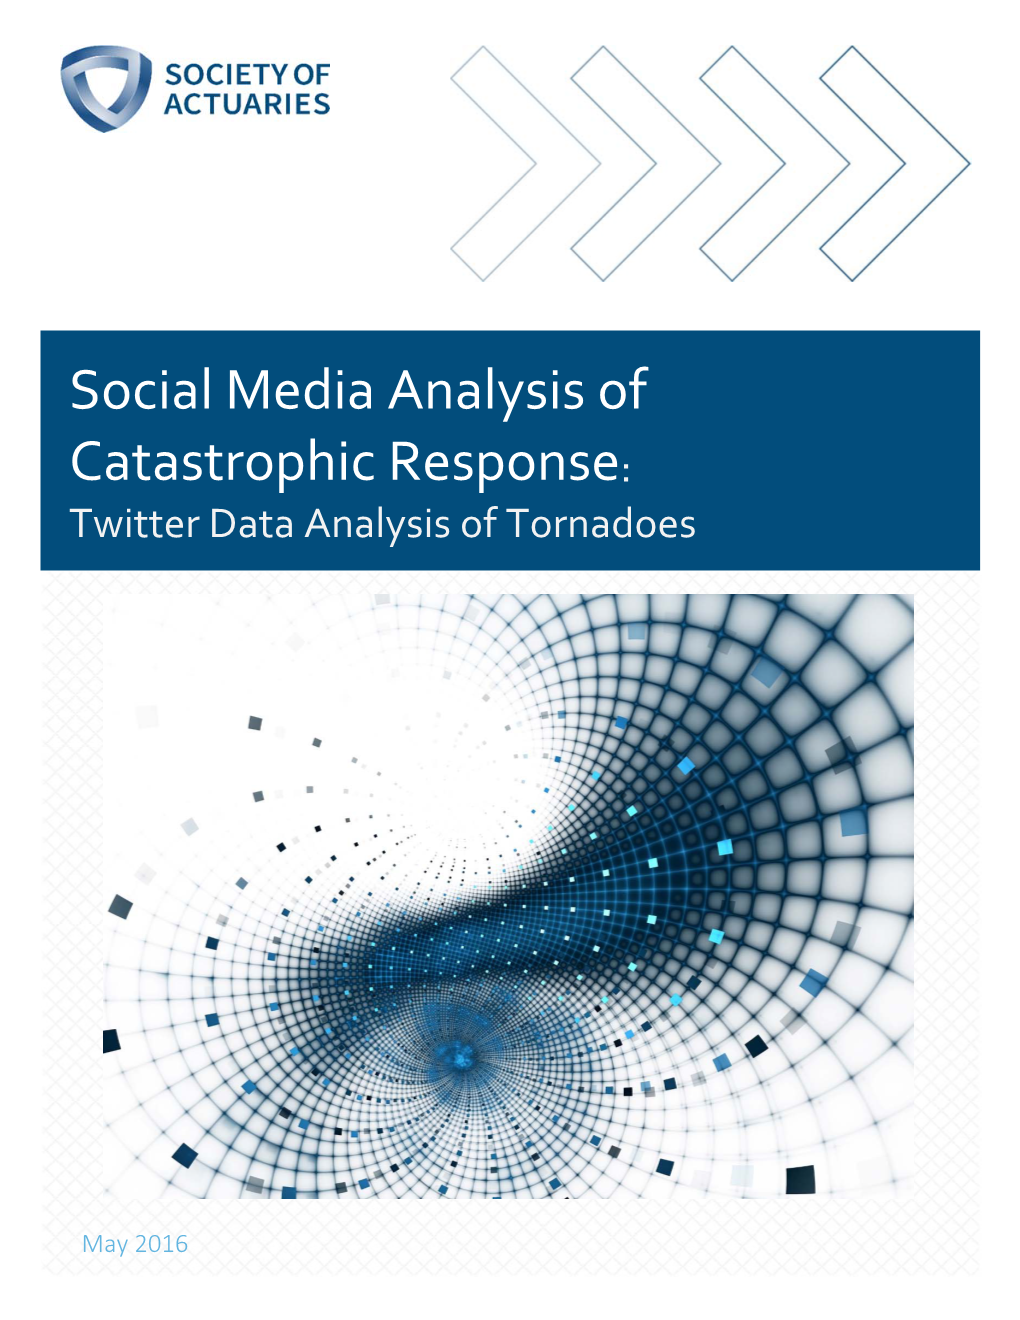 Social Media Analysis of Catastrophic Responses